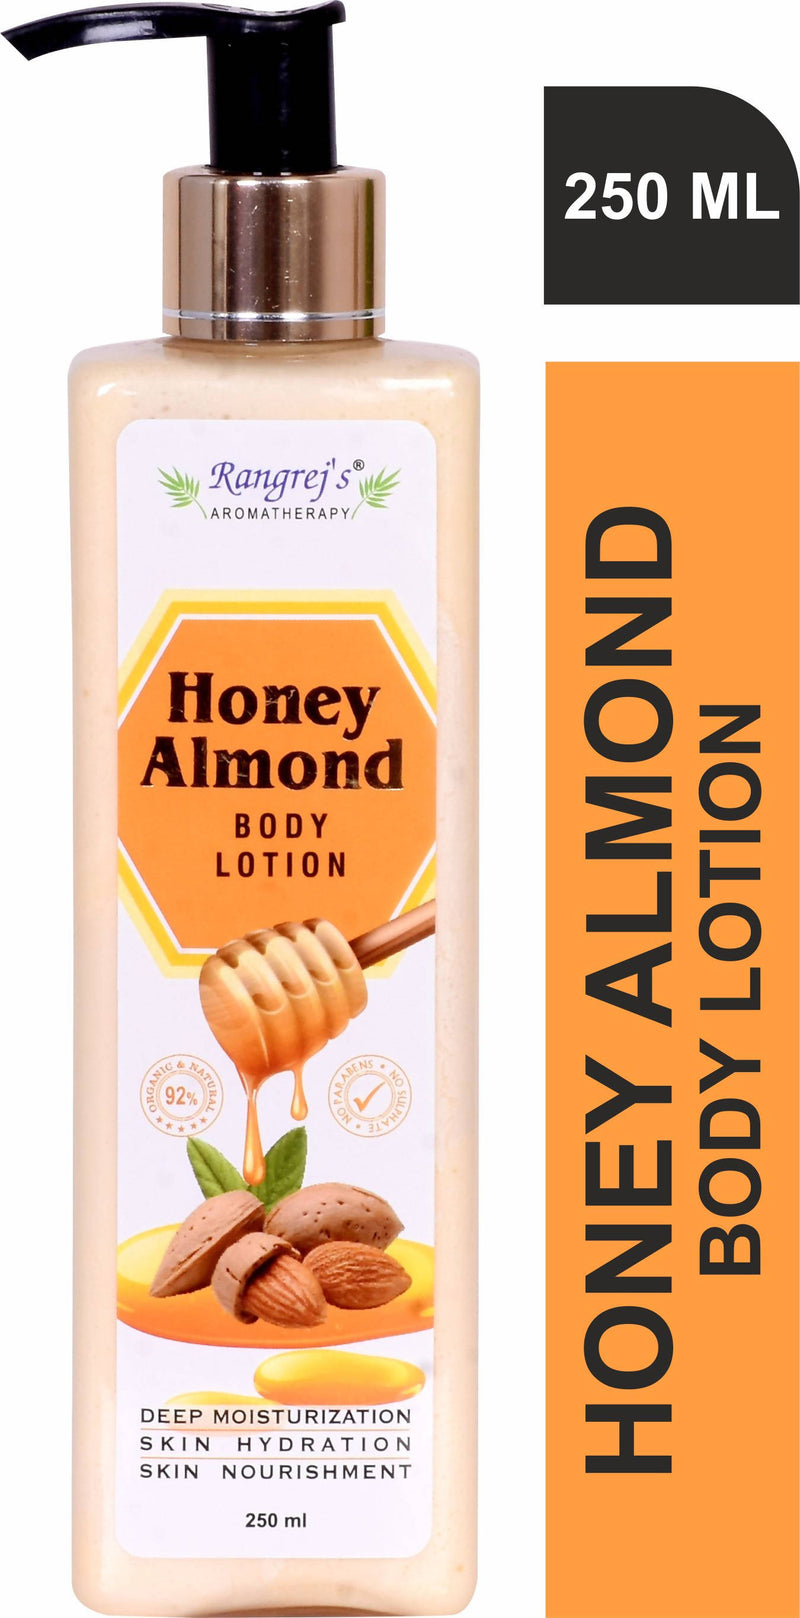 Rangrej's Aromatherapy Honey Almond Body lotion